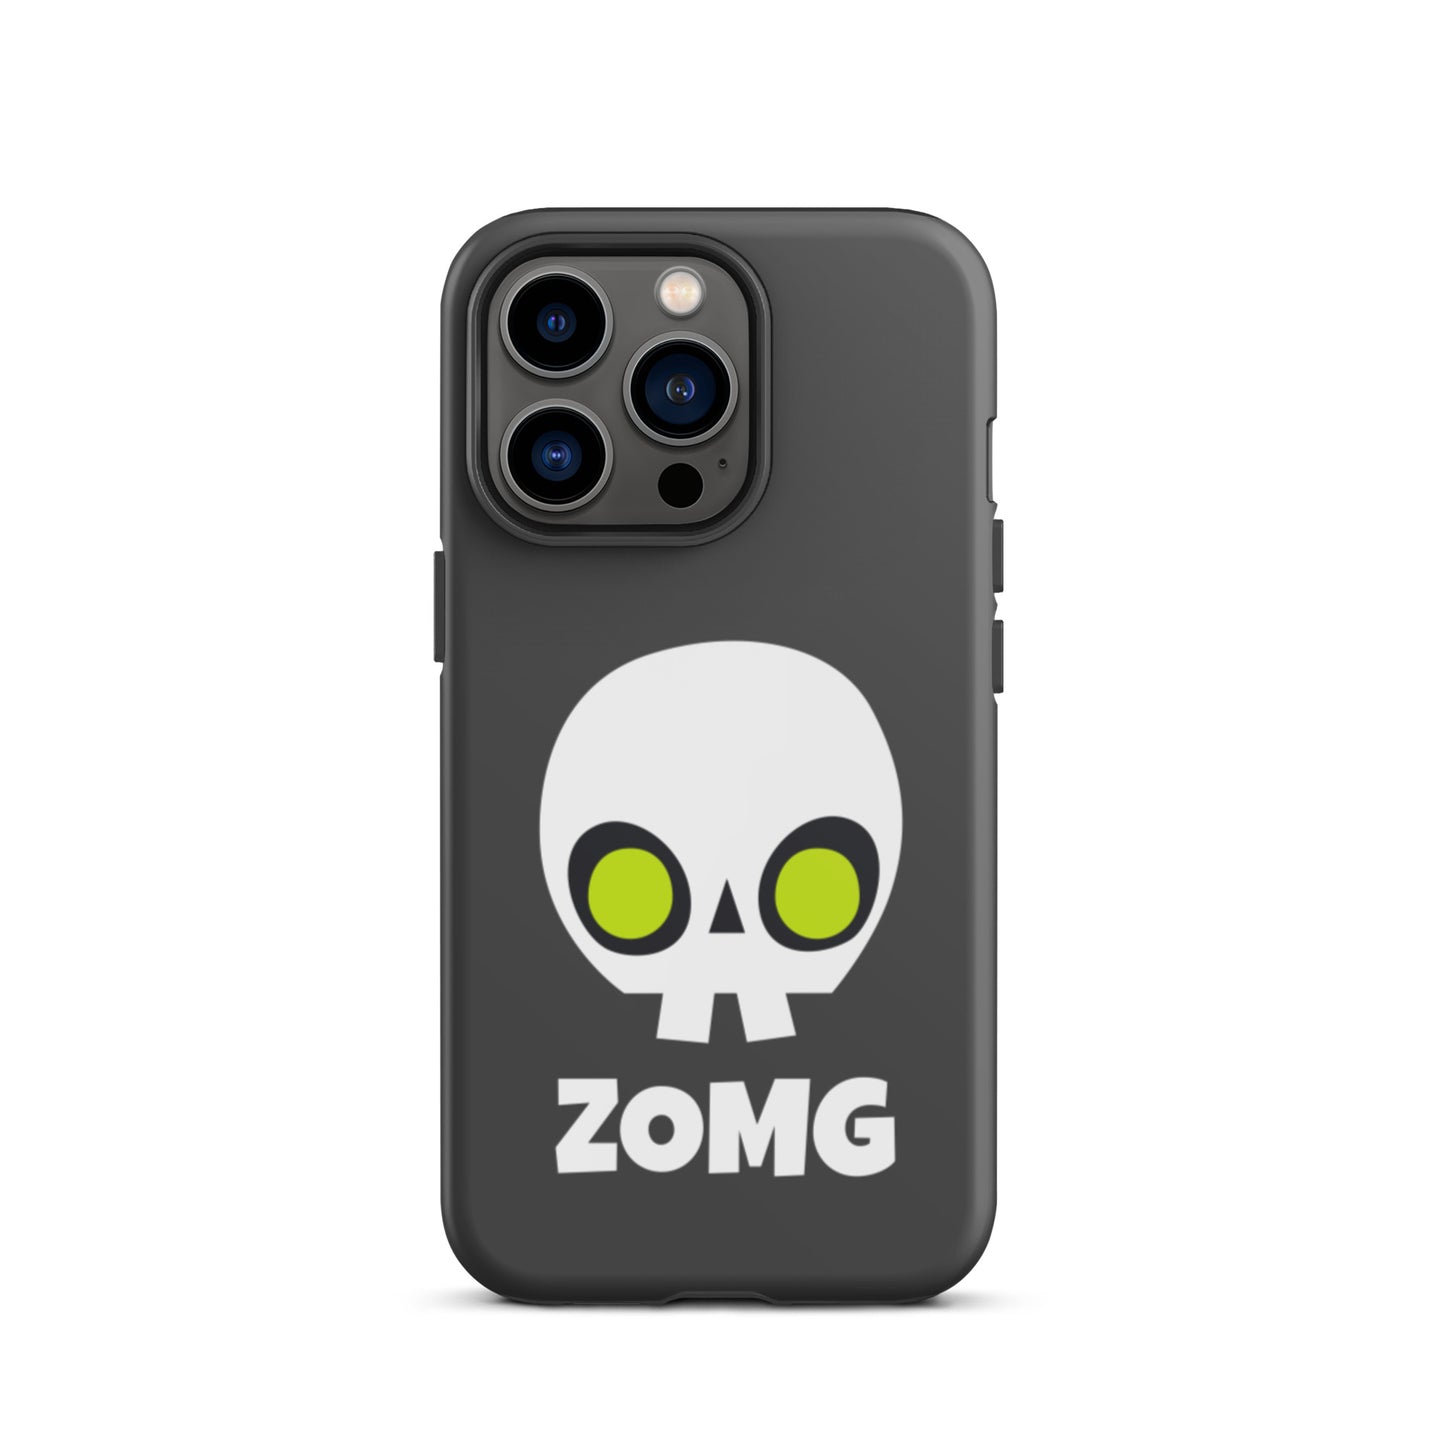 ZOMG iPhone Case (Tough)